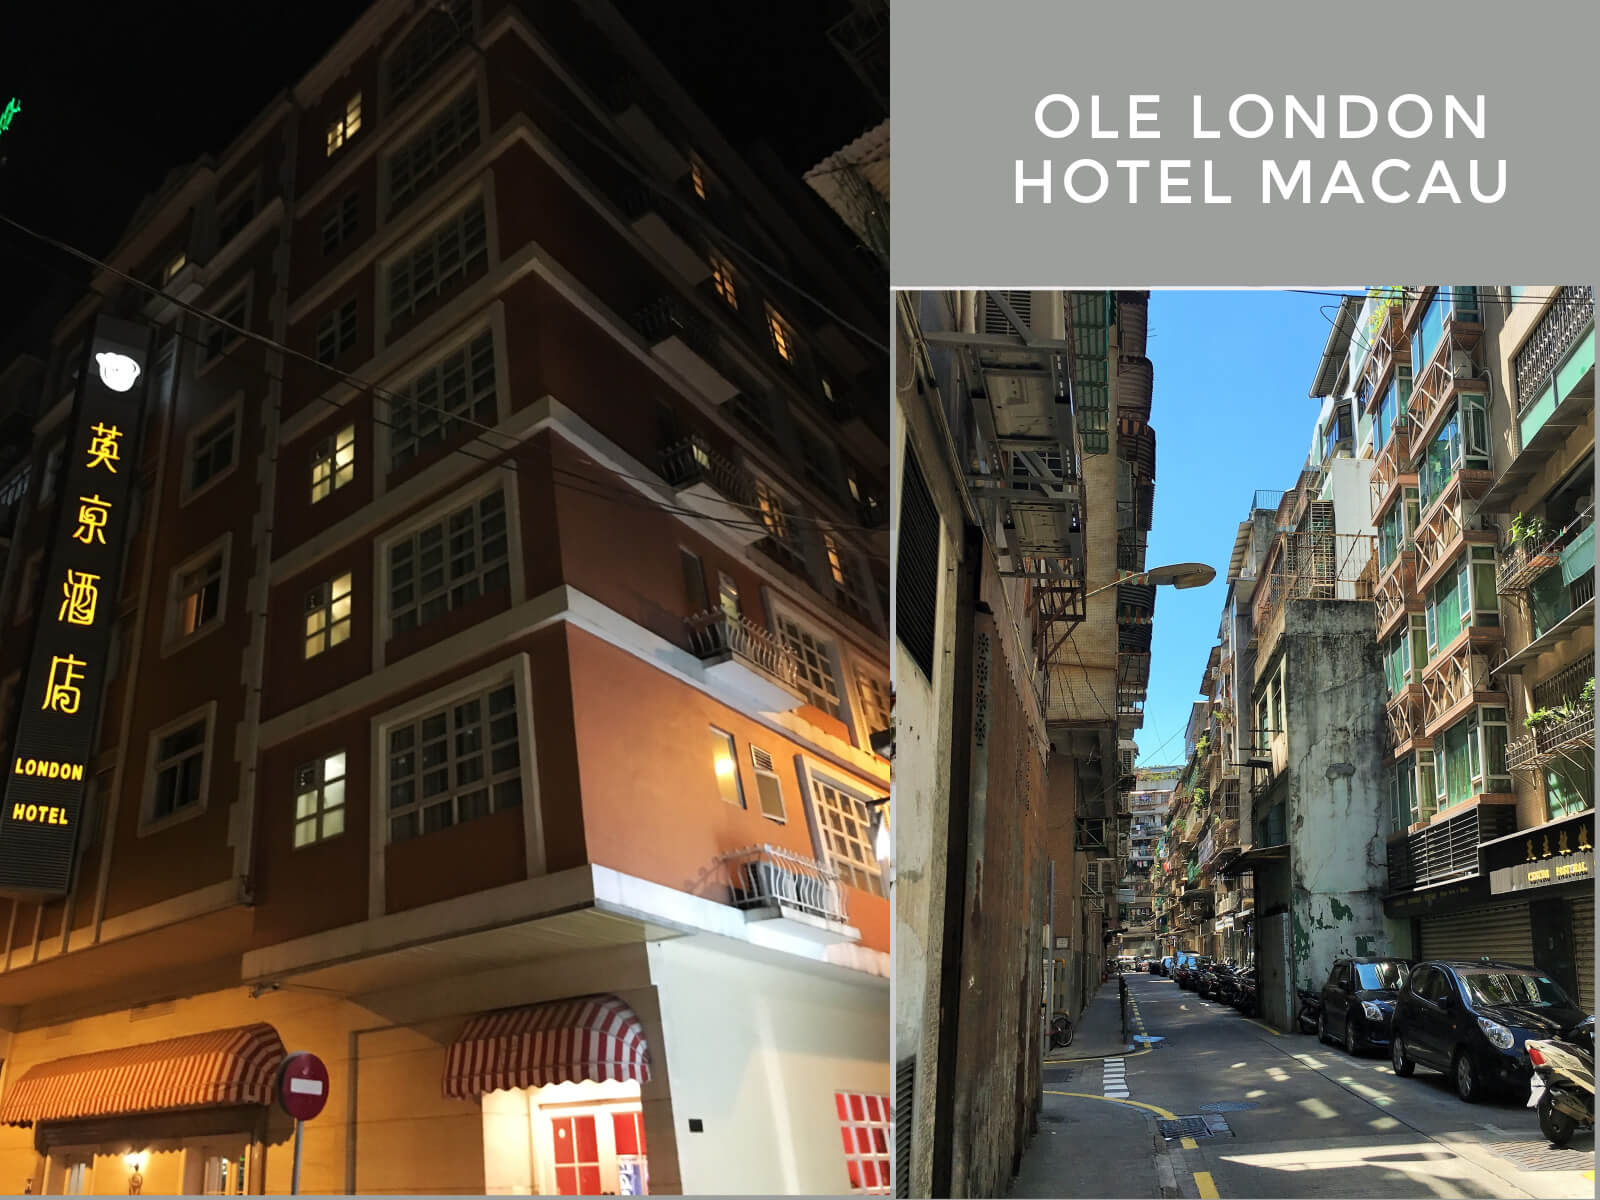 Ole-London-Hotel-Macau-Night